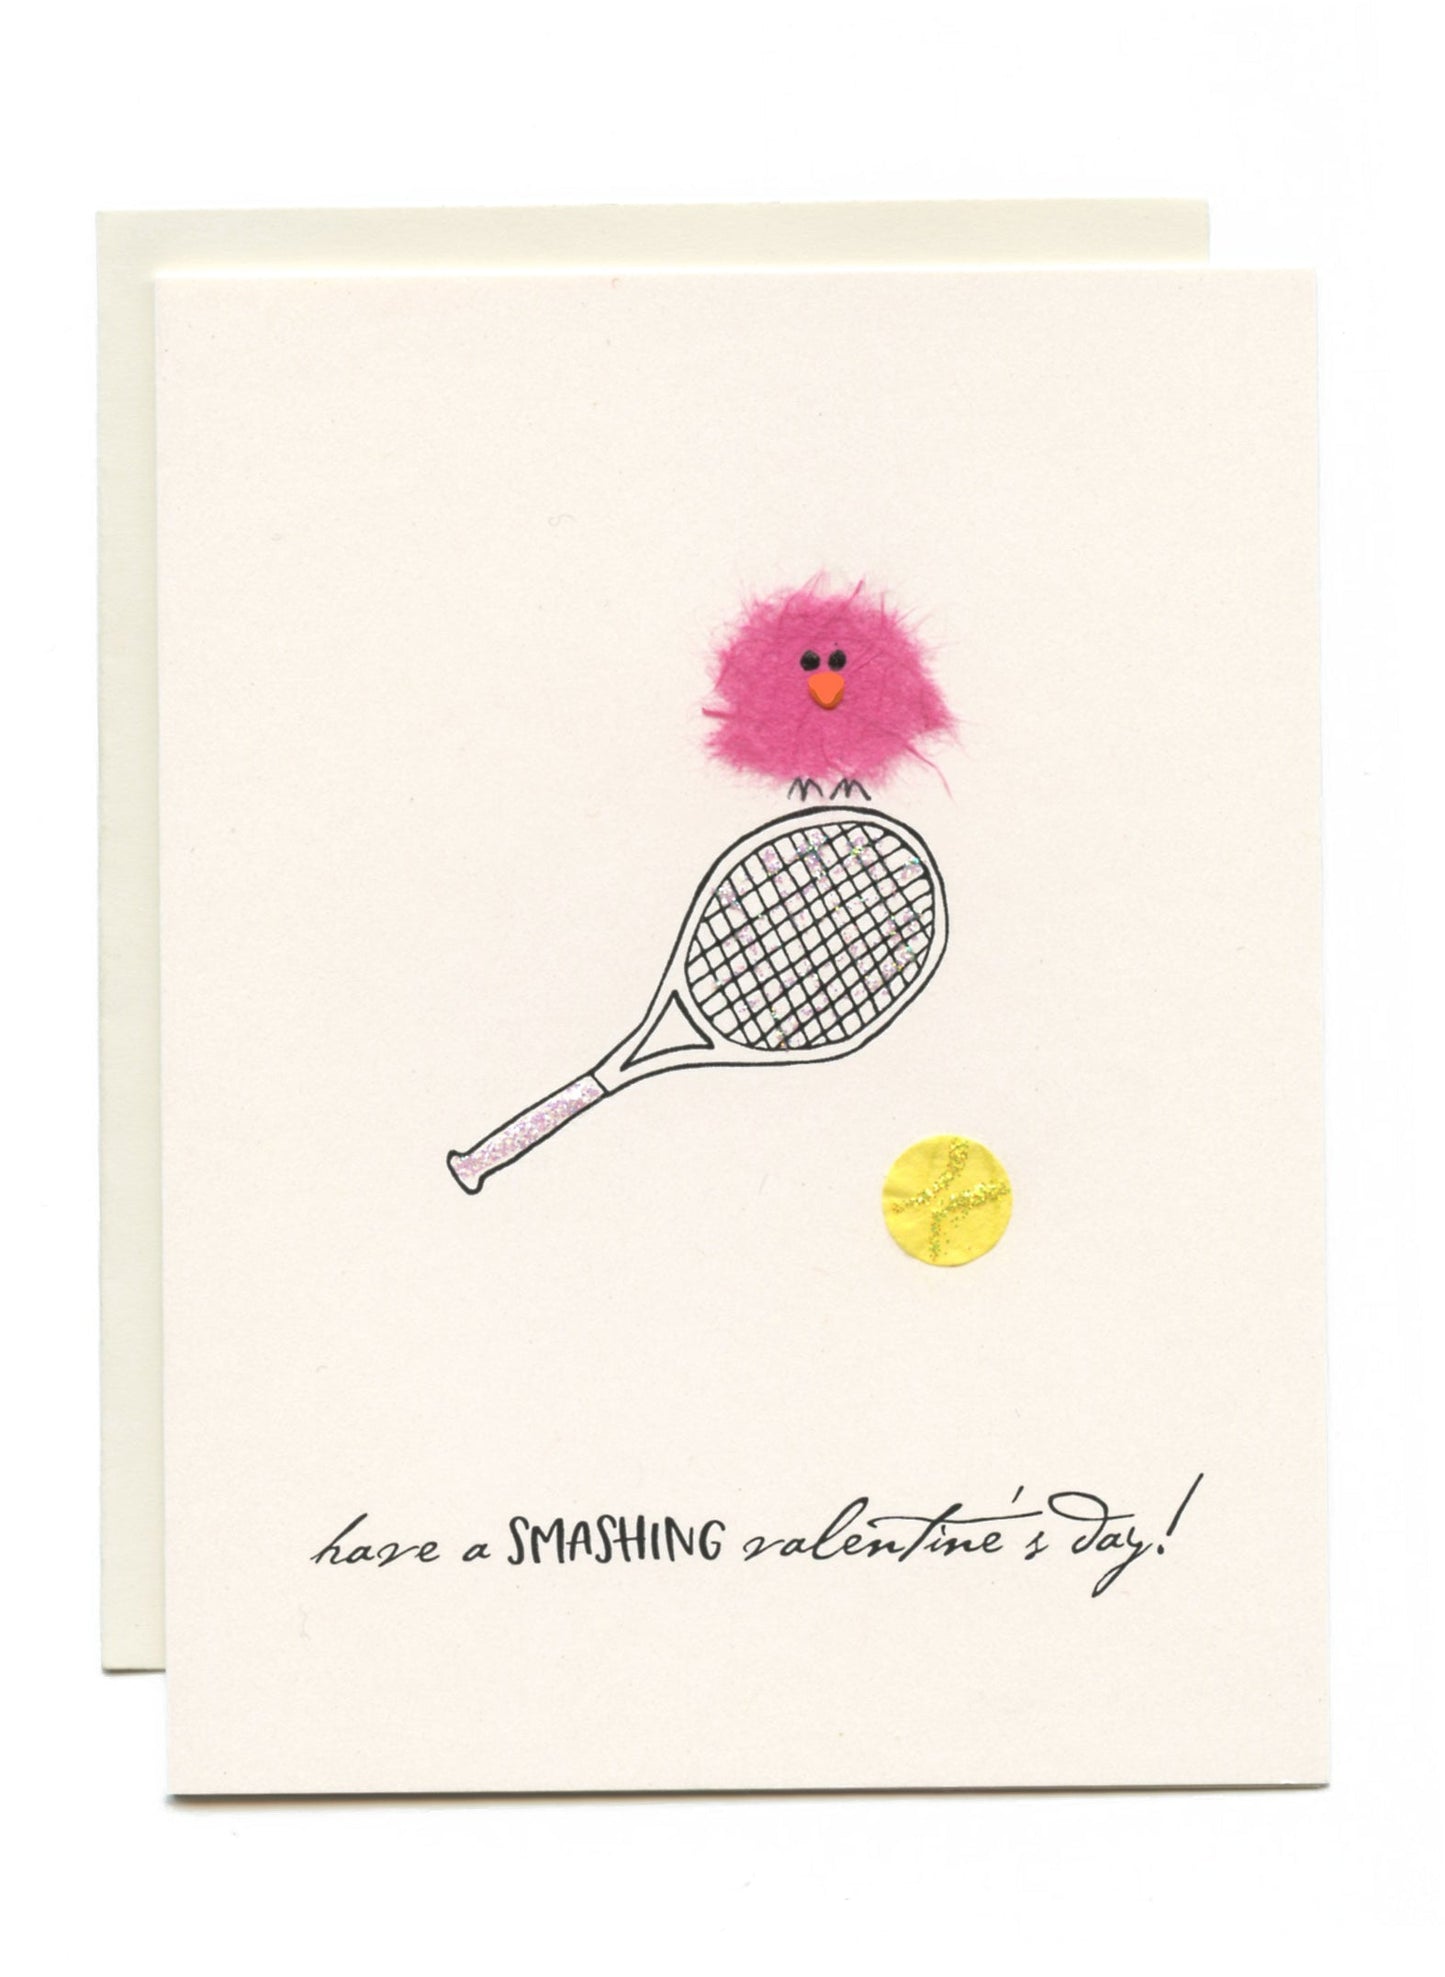 "Have a SMASHING valentine's day!" Bird on Racket